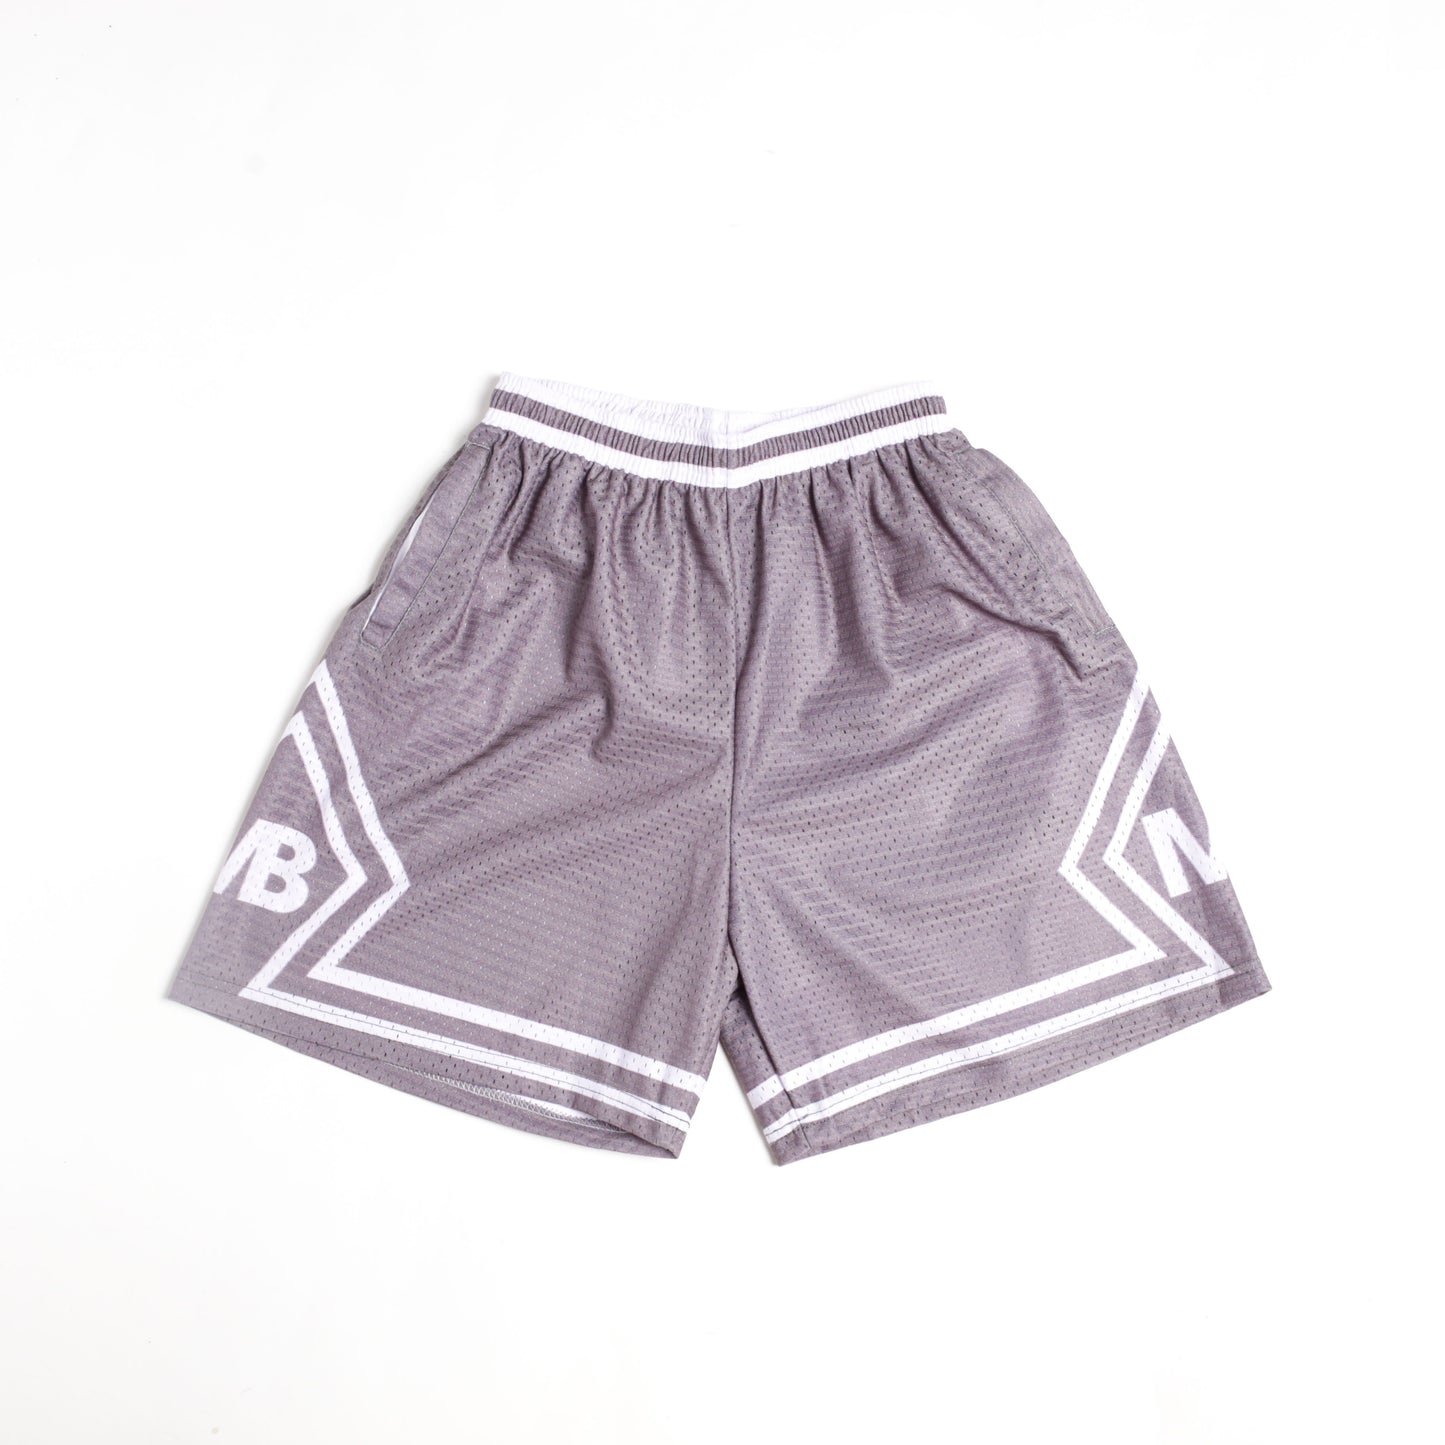 MB Classic Mesh Shorts | 4 colors